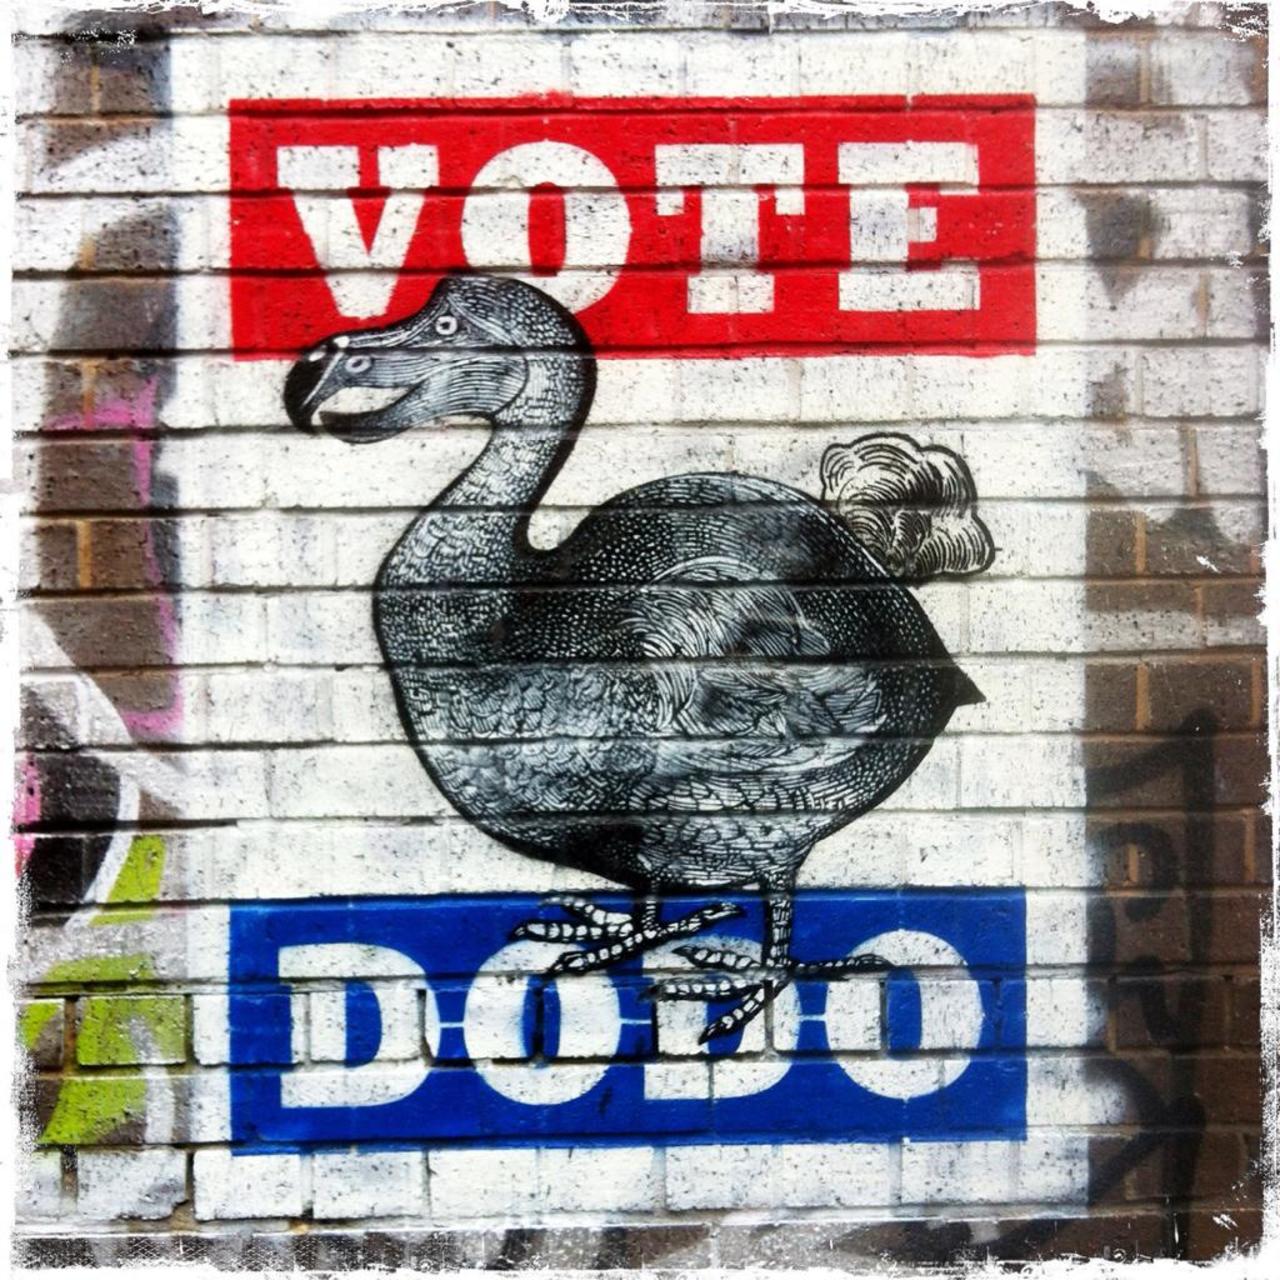 RT @BrickLaneArt: Vote Dodo - Grey Eagle Street work by @kguyrants #art #streetart #graffiti http://t.co/L6xh78STXo